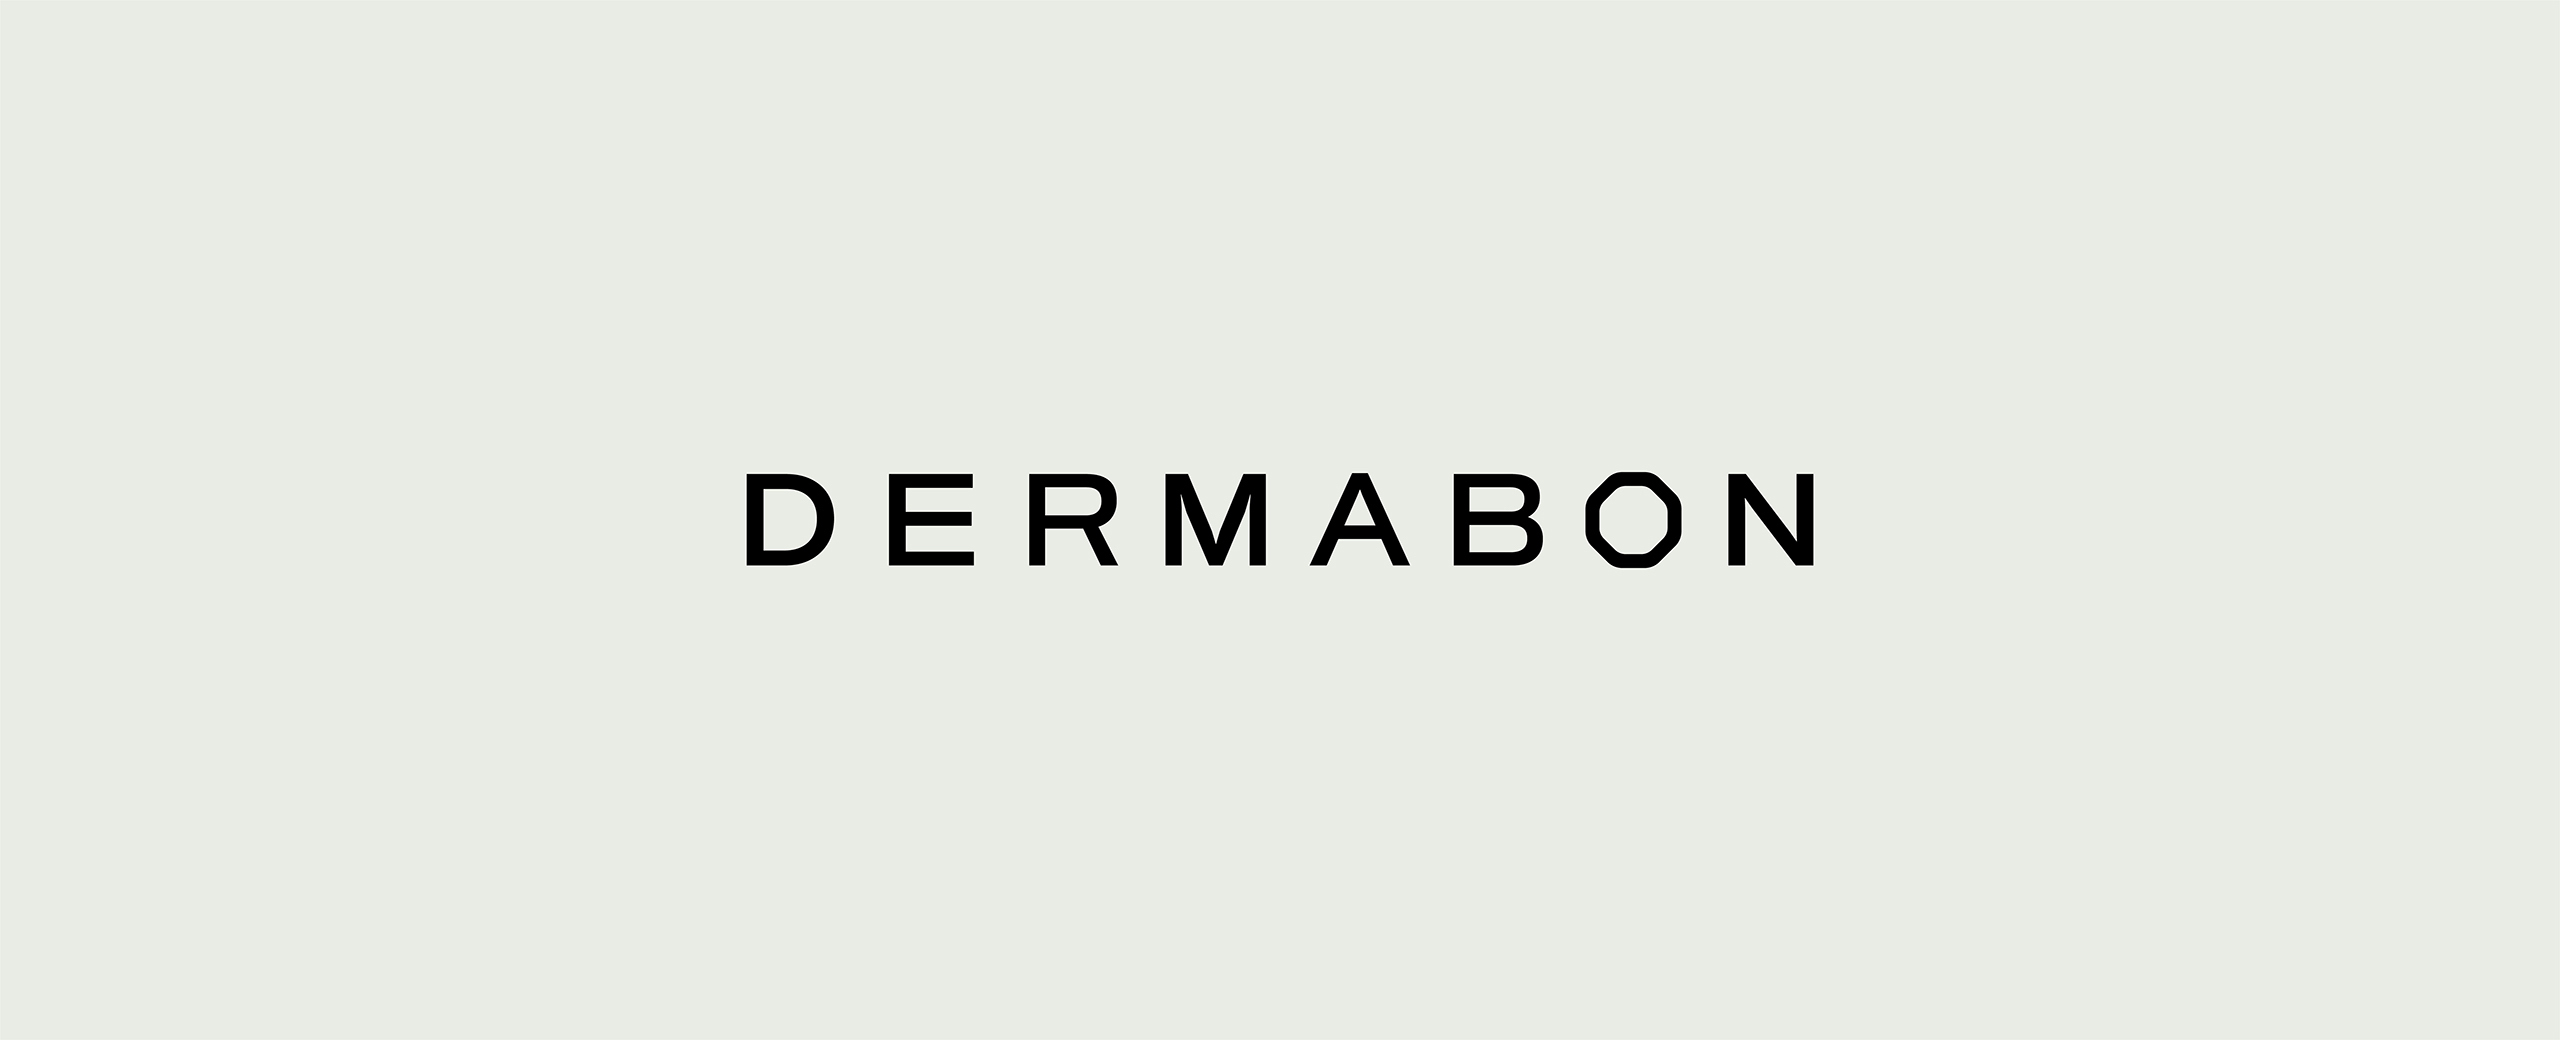 Dermabon is a brand developed by Phidev